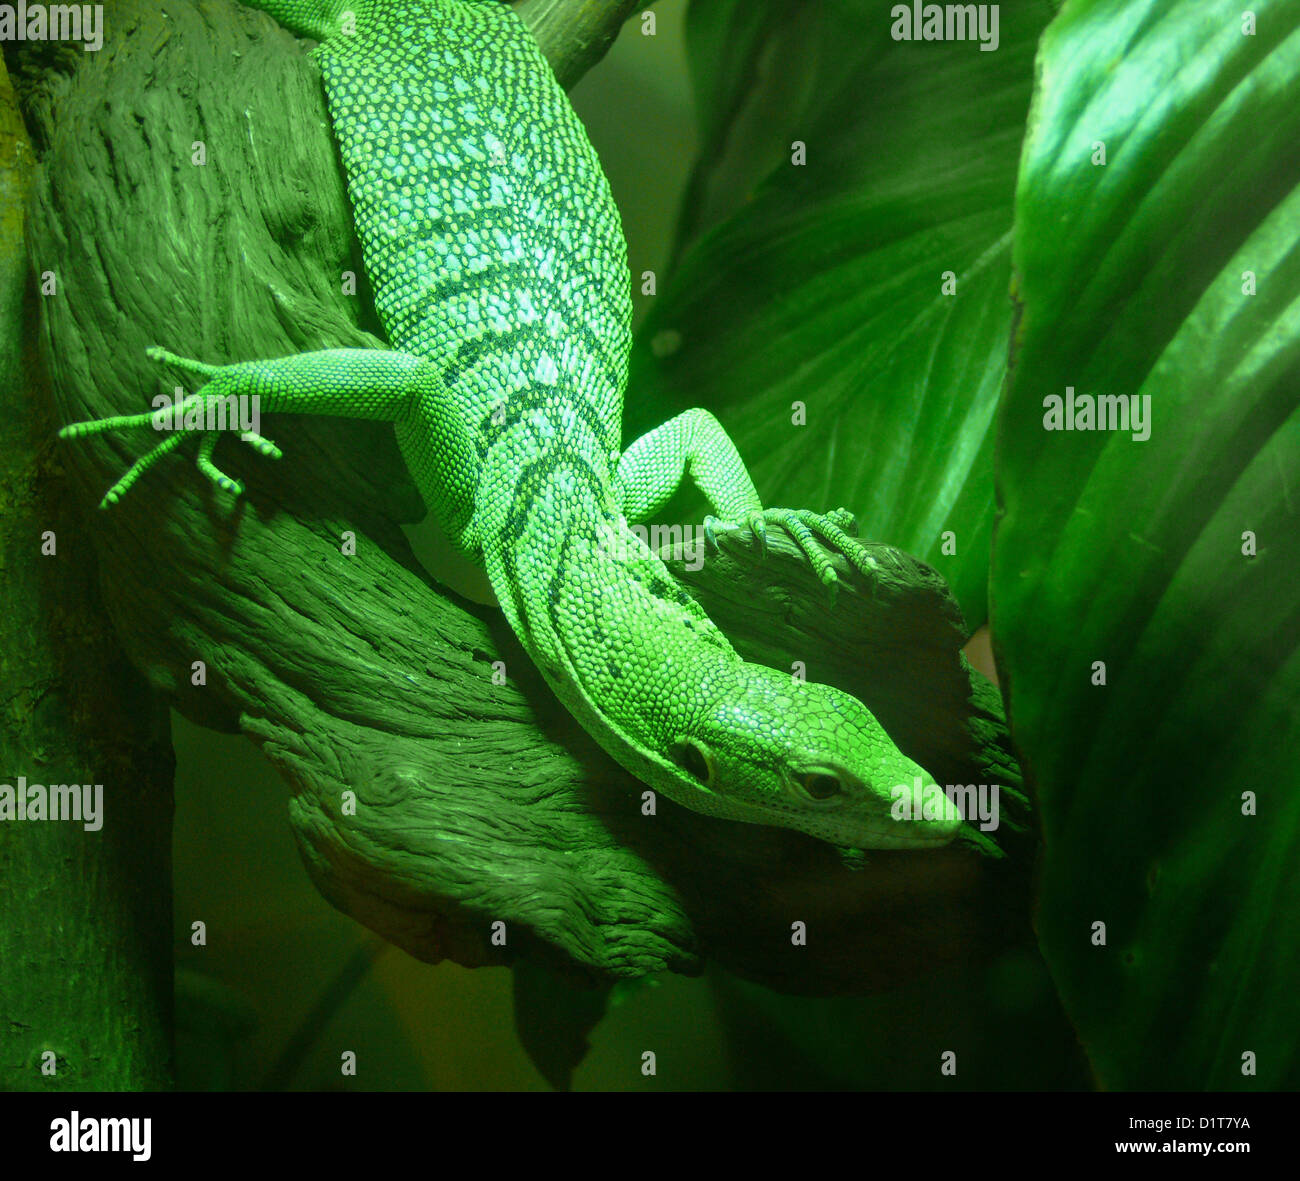 green tree monitor lizard Stock Photo